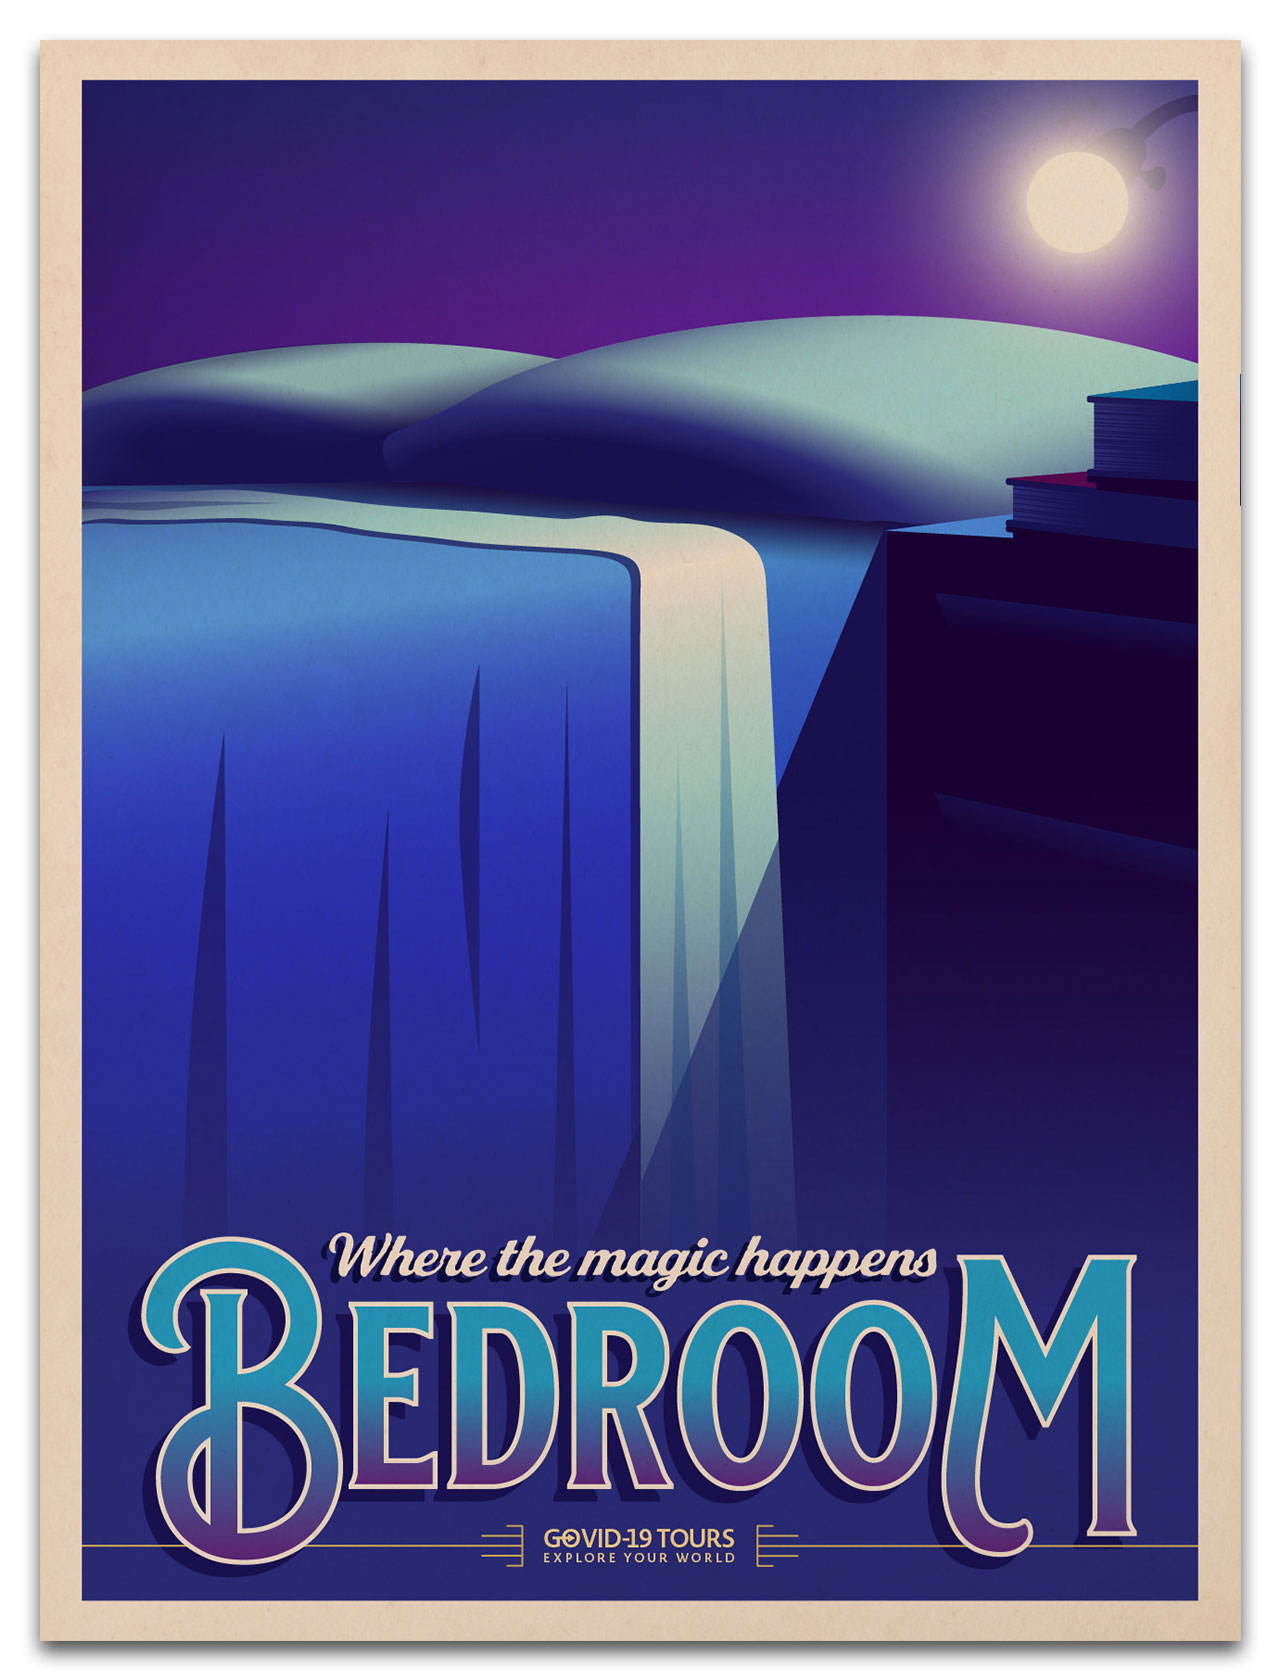 Bedroom Quarantine Travel Poster